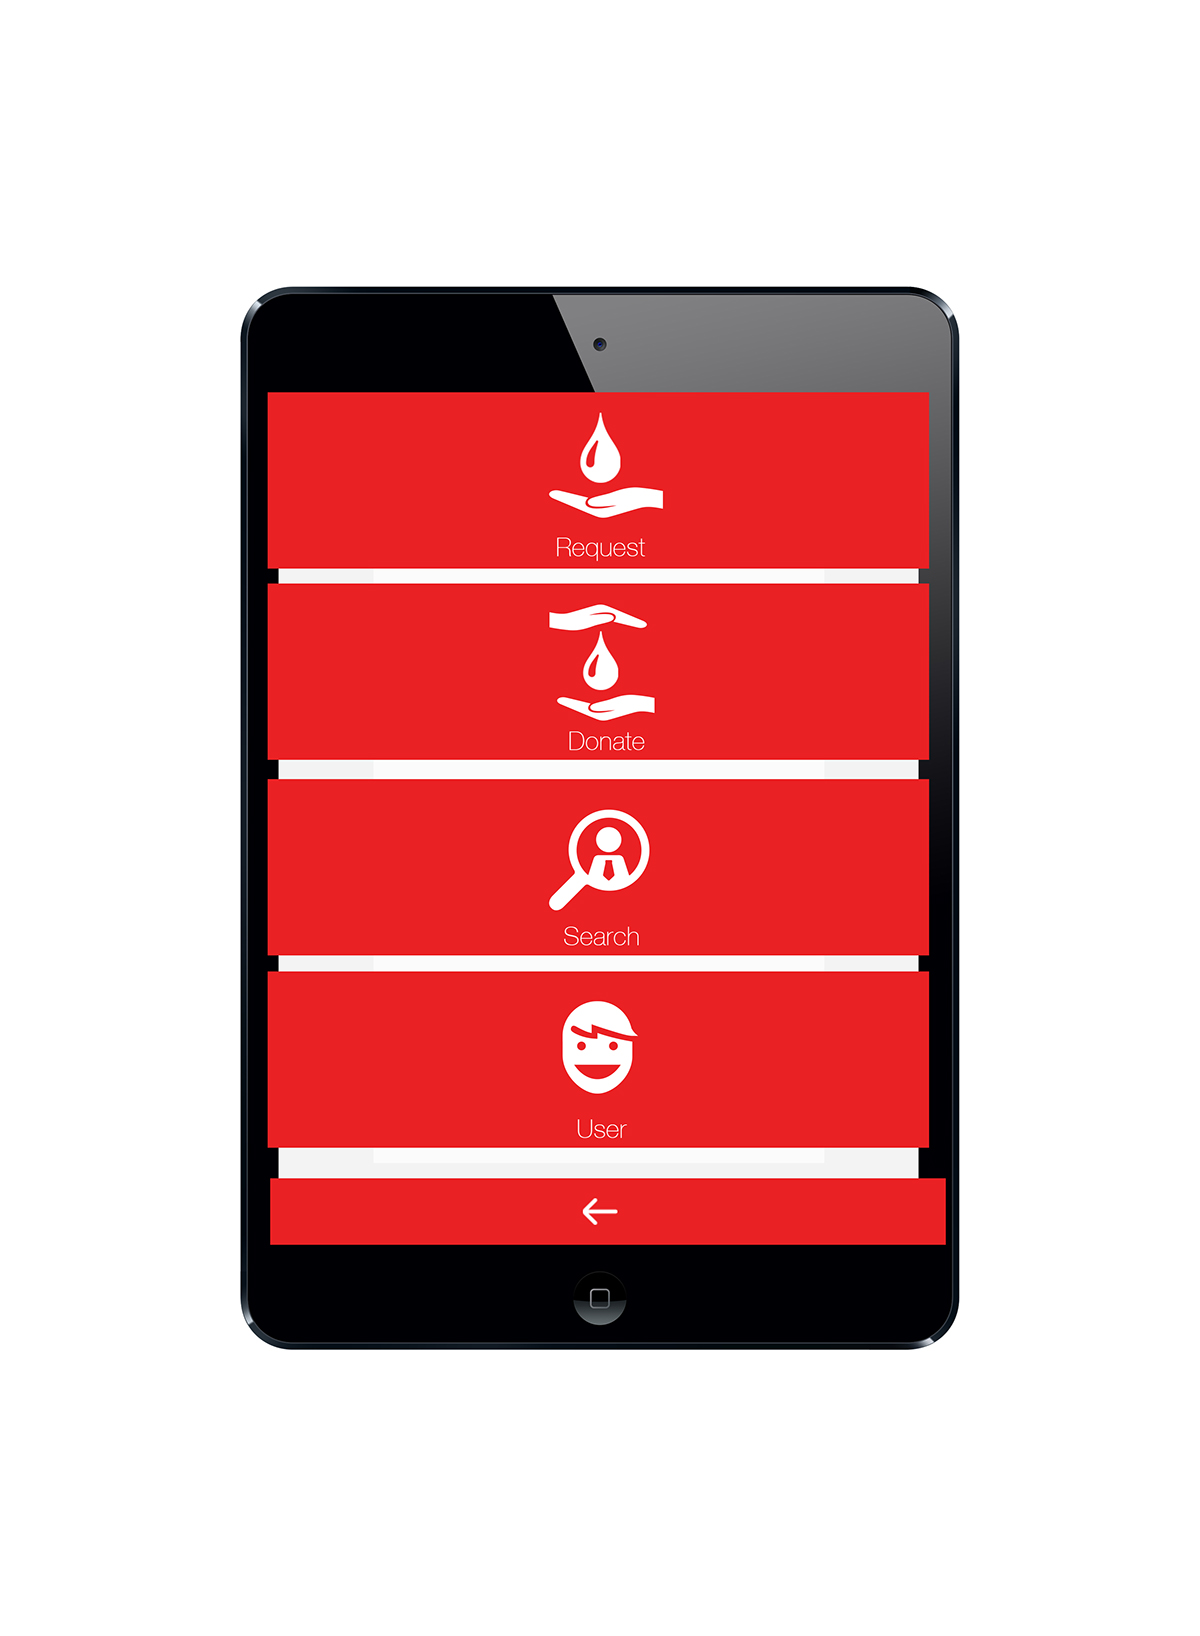 app design app art Web application designing interaction UI